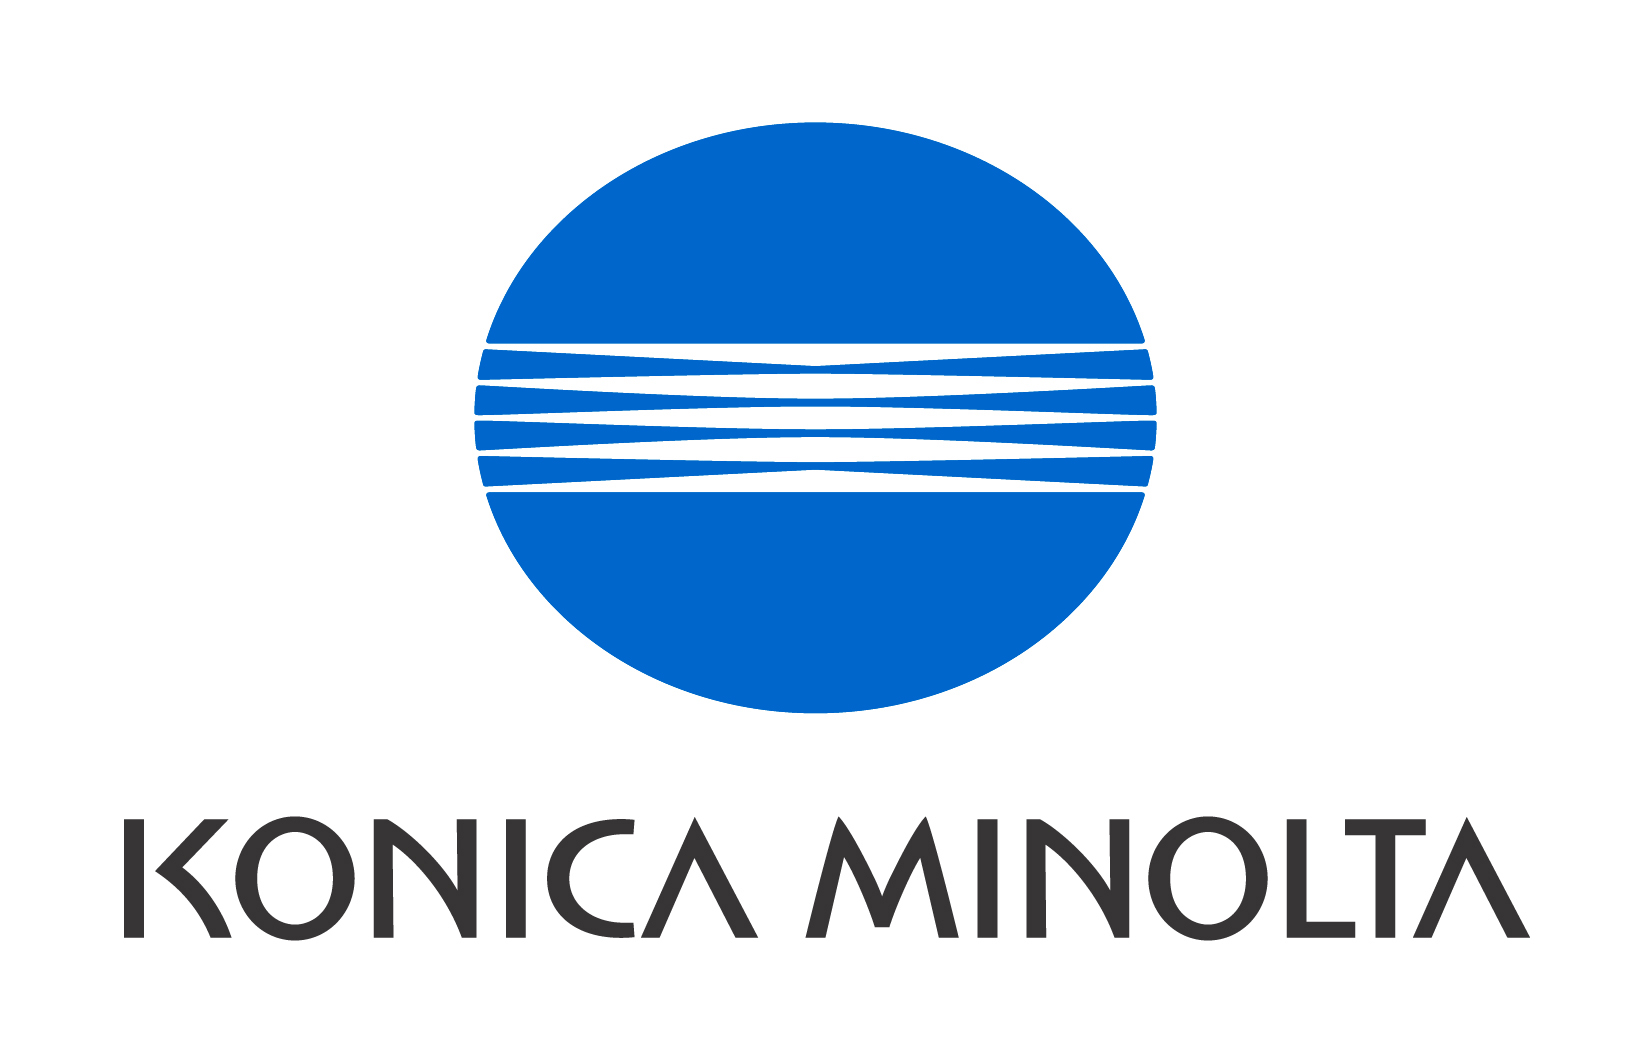 18 Q1 Konica Minolta Large Type A Logo Vertical 1631x1063px 4 002